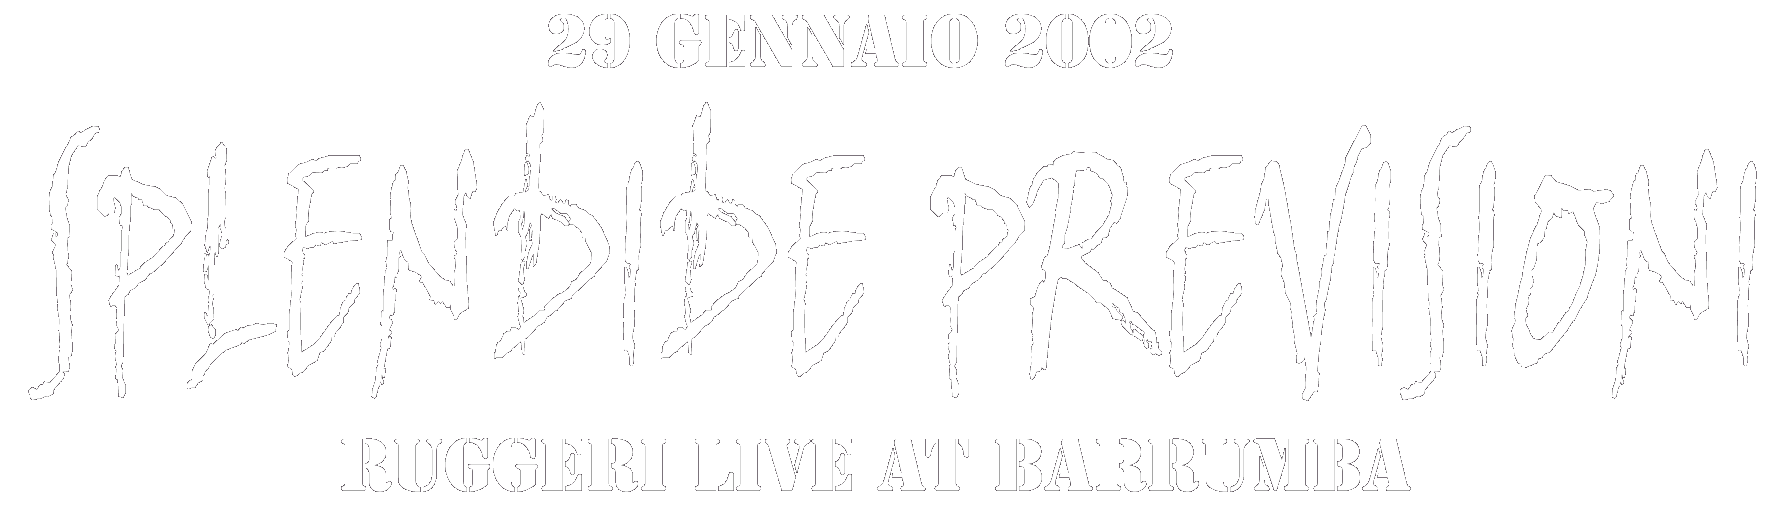 SPLENDIDE PREVISIONI - Ruggeri al Barrumba - 29/1/2002